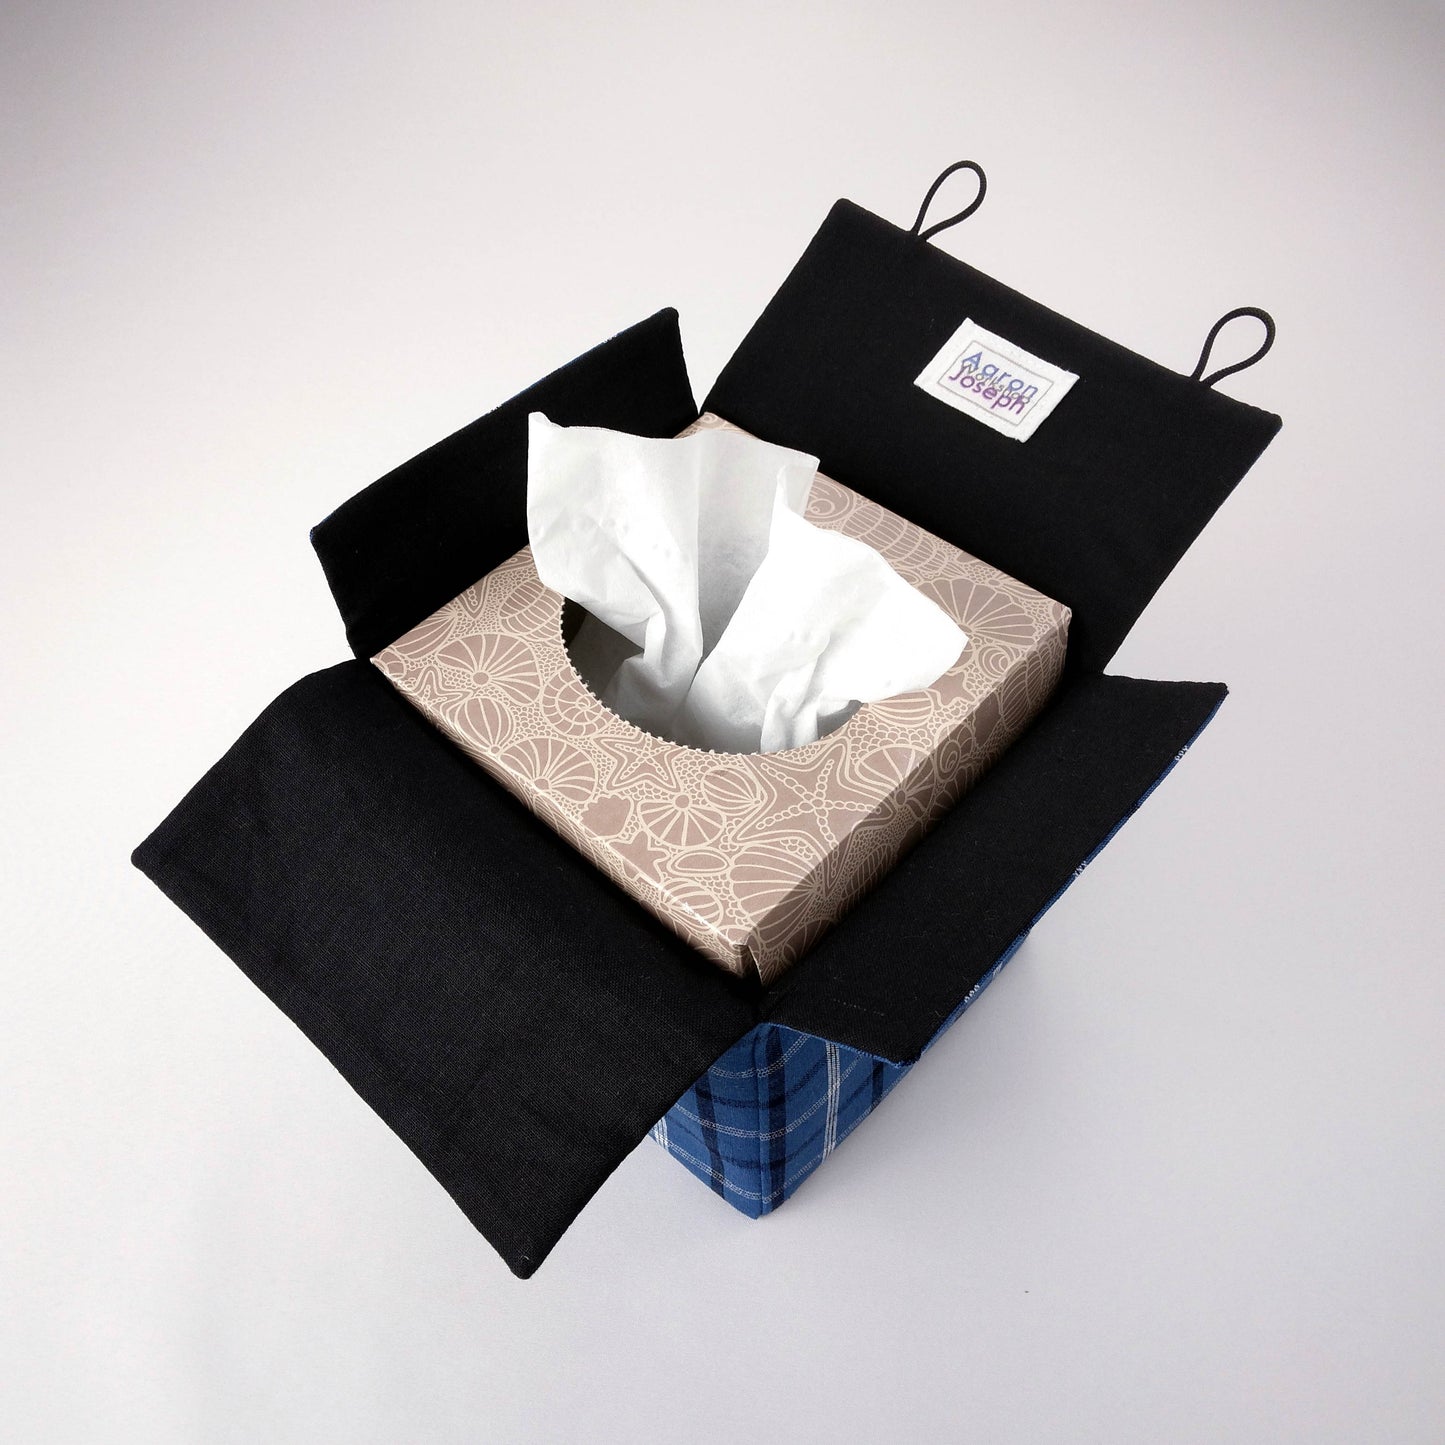 Cube Fabric Tissue Box Cover - Black, White, & Blue Plaid